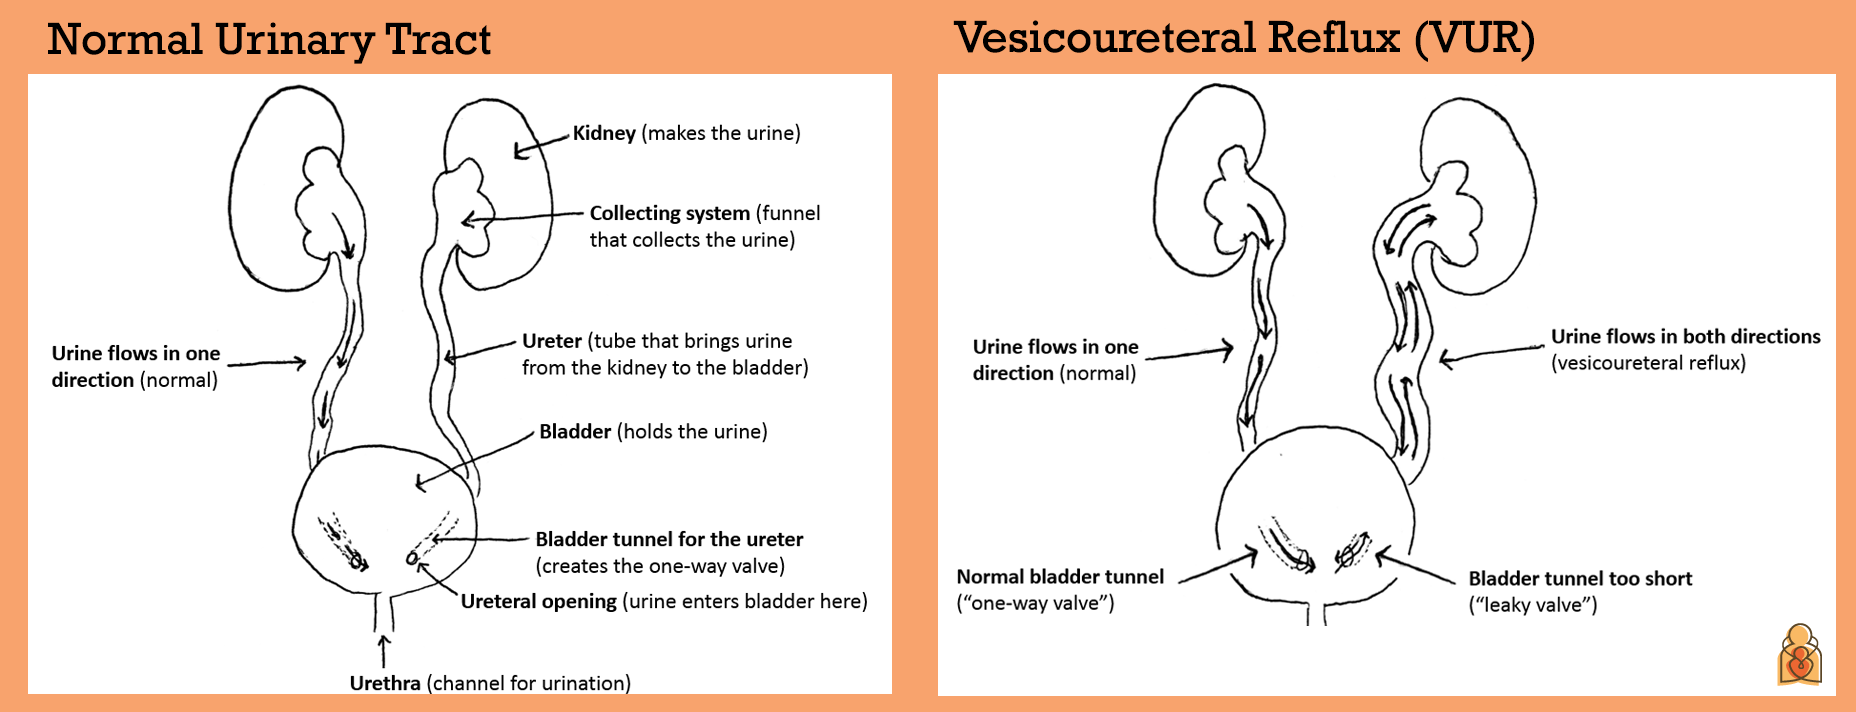 Diagram - Normal Urinary Tract vs. Vesicoureteral Reflux